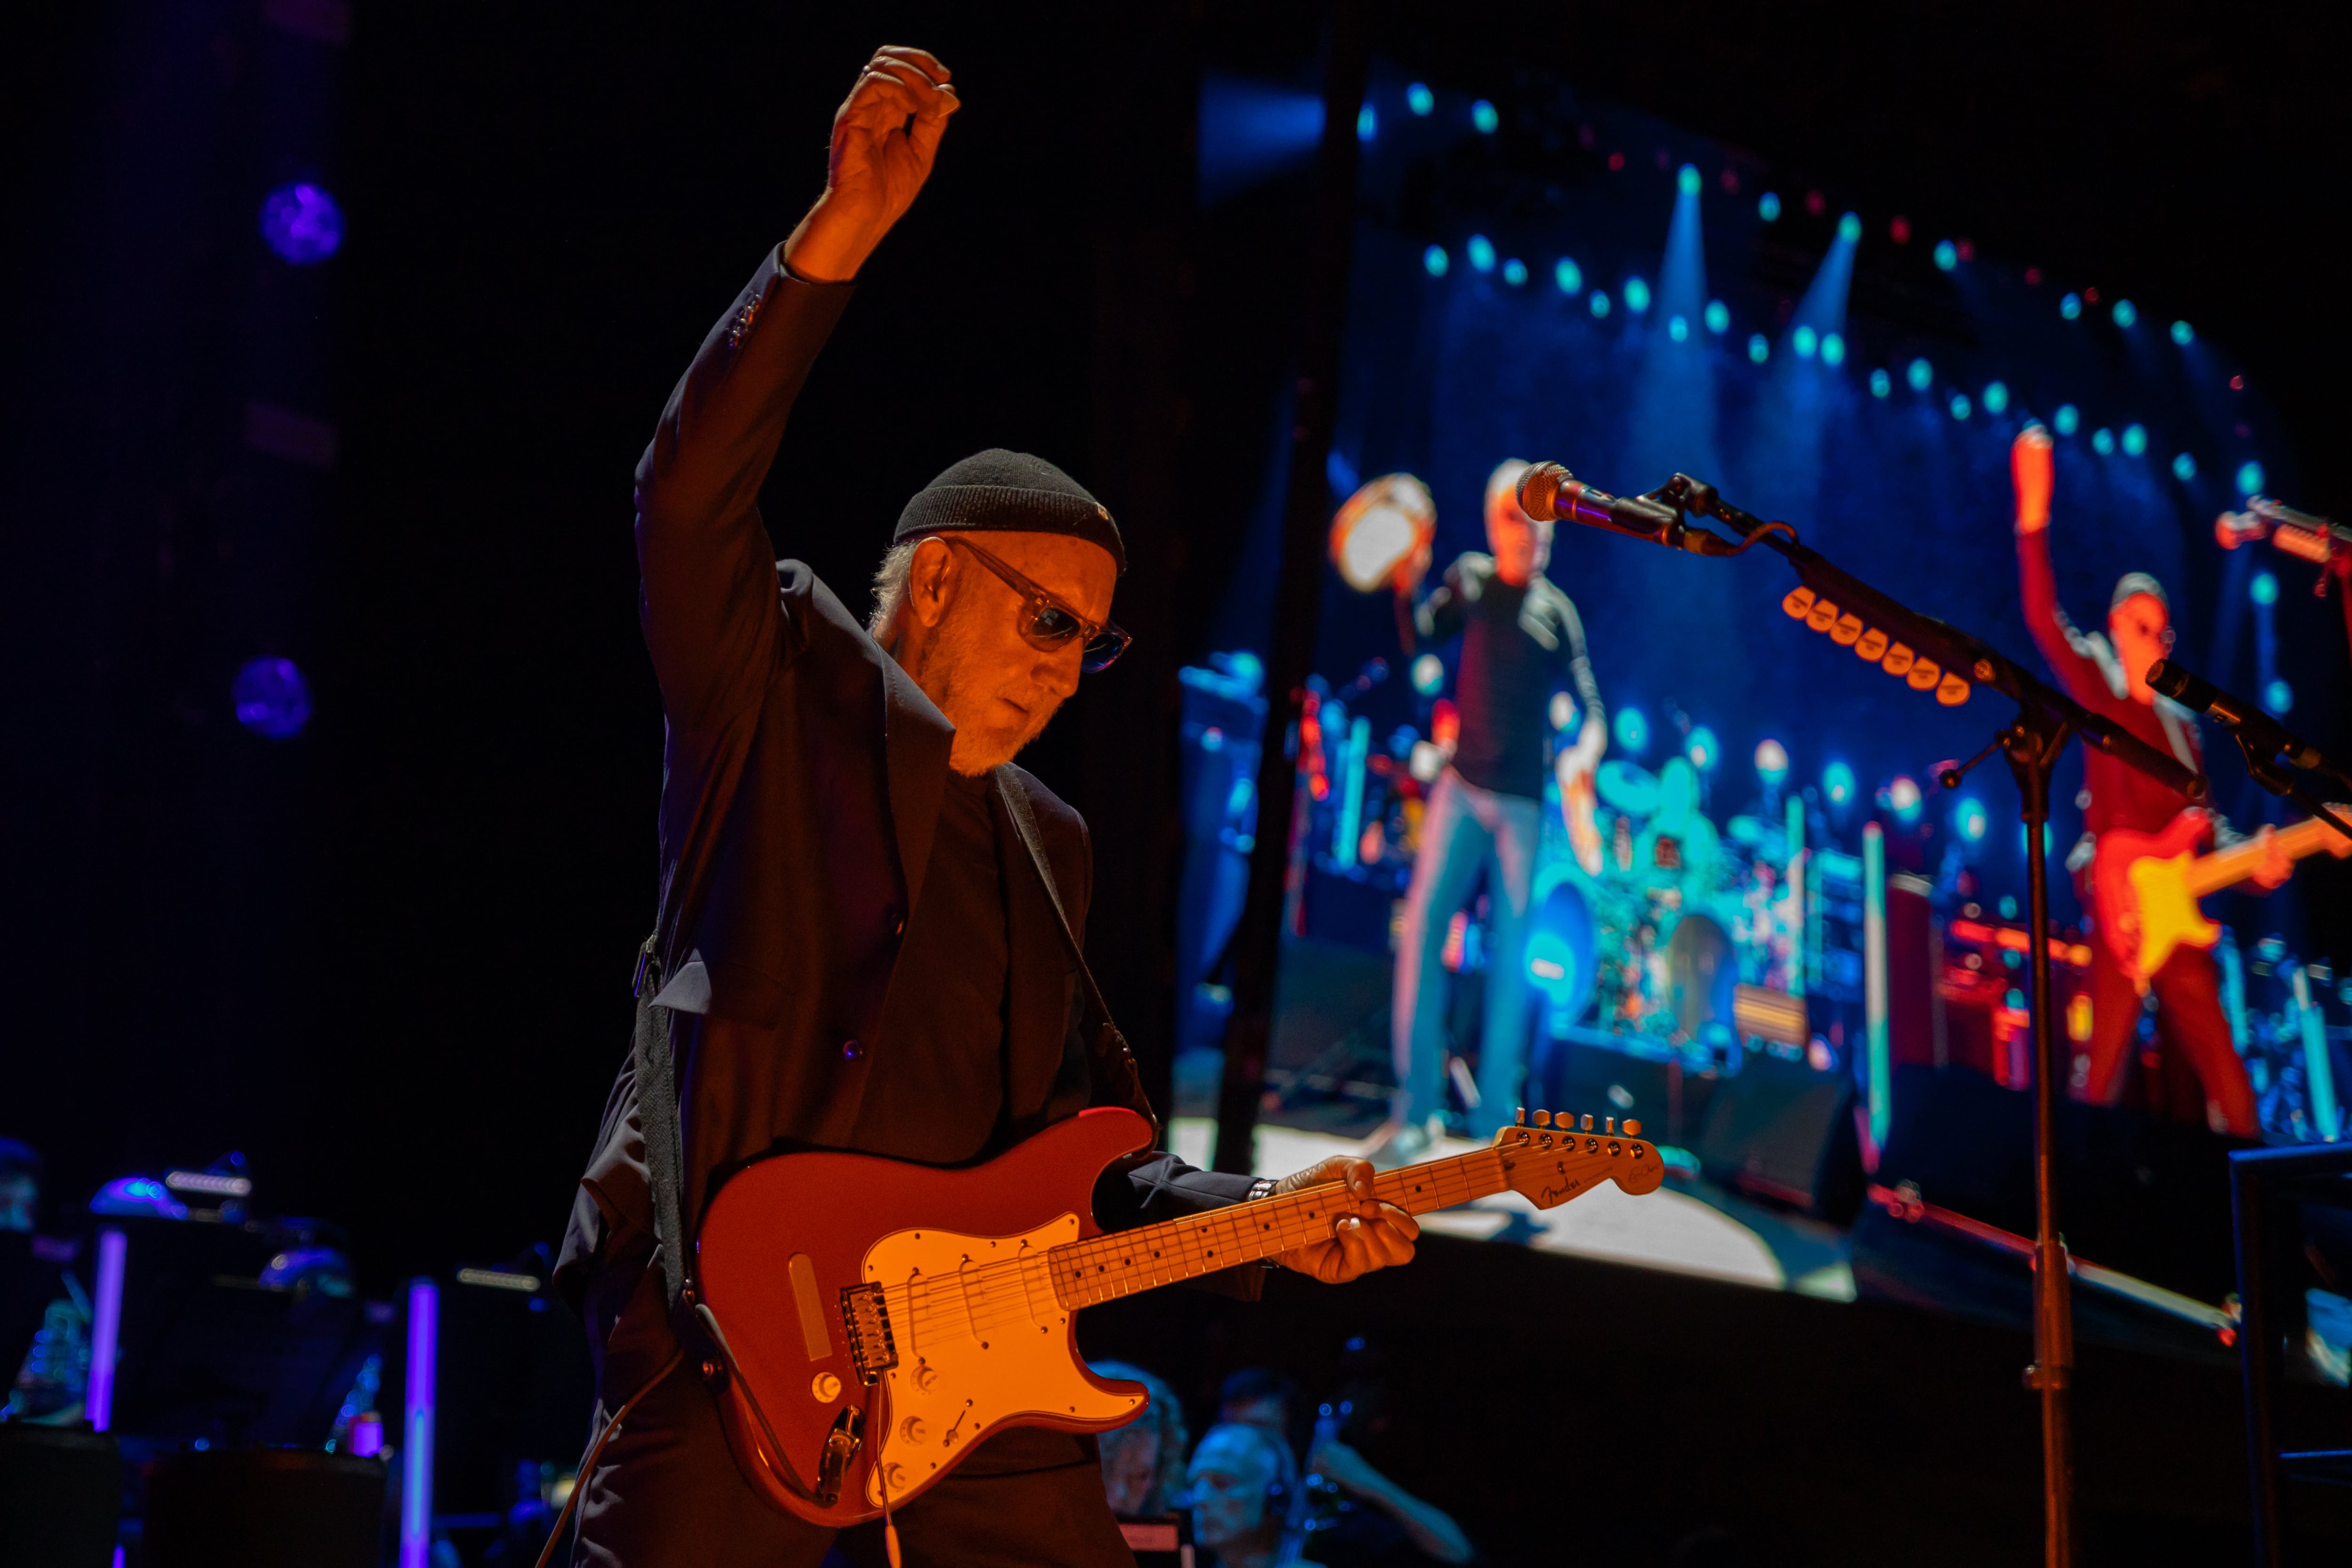 El grupo The Who actúa en el Palau Sant Jordi.  Kike Rincón / Europa Press